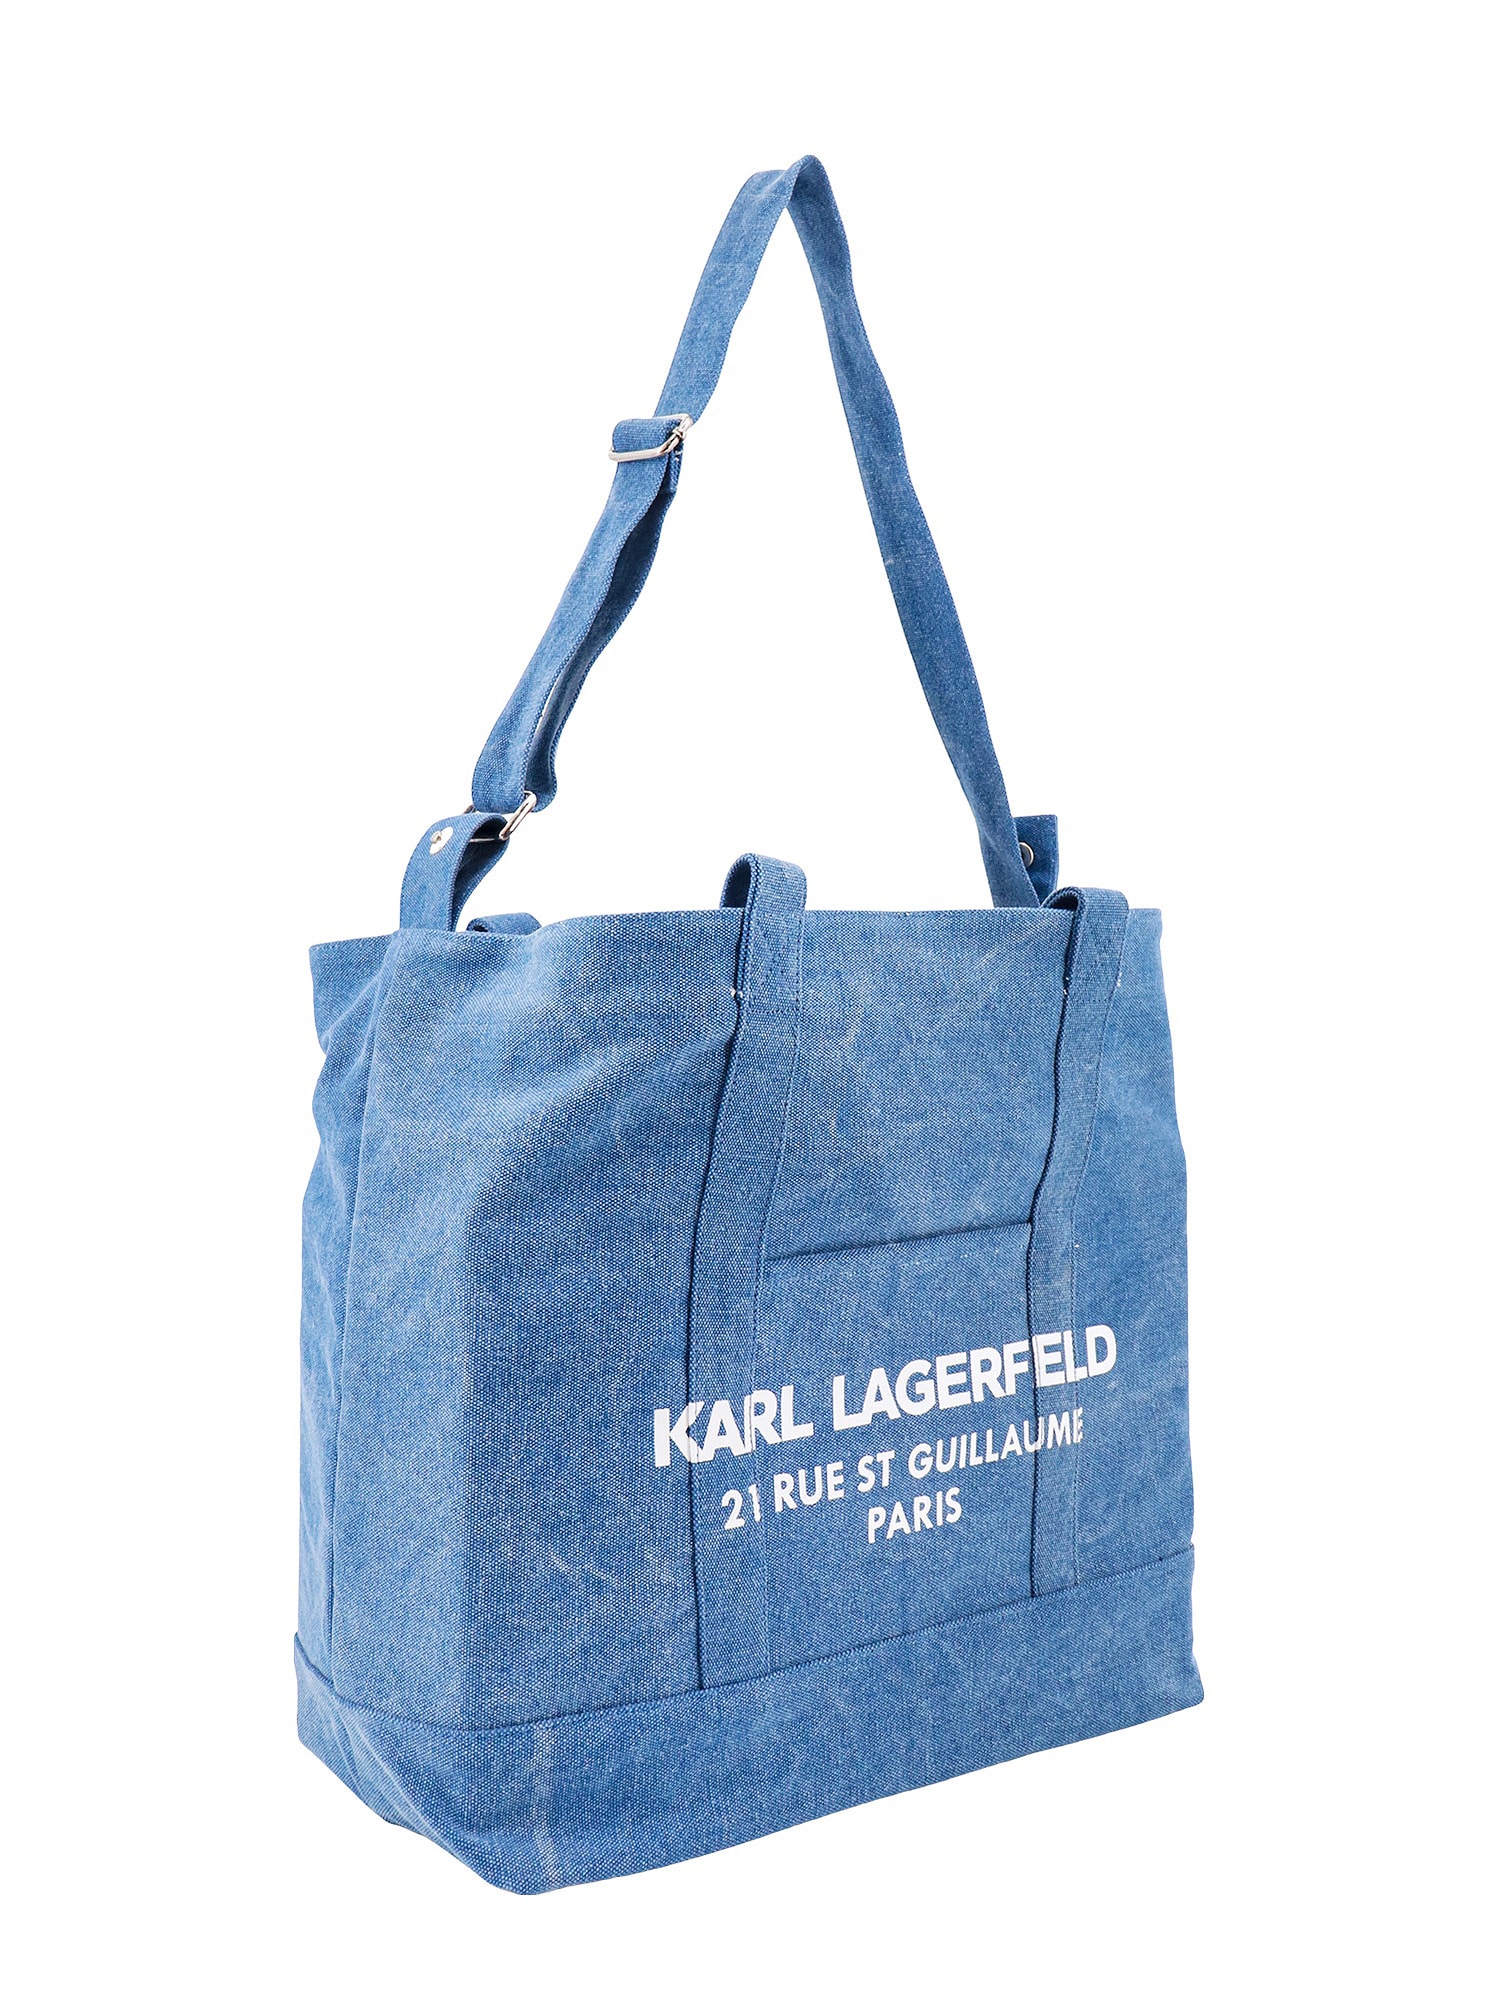 KARL LAGERFELD SHOPPING BAG 